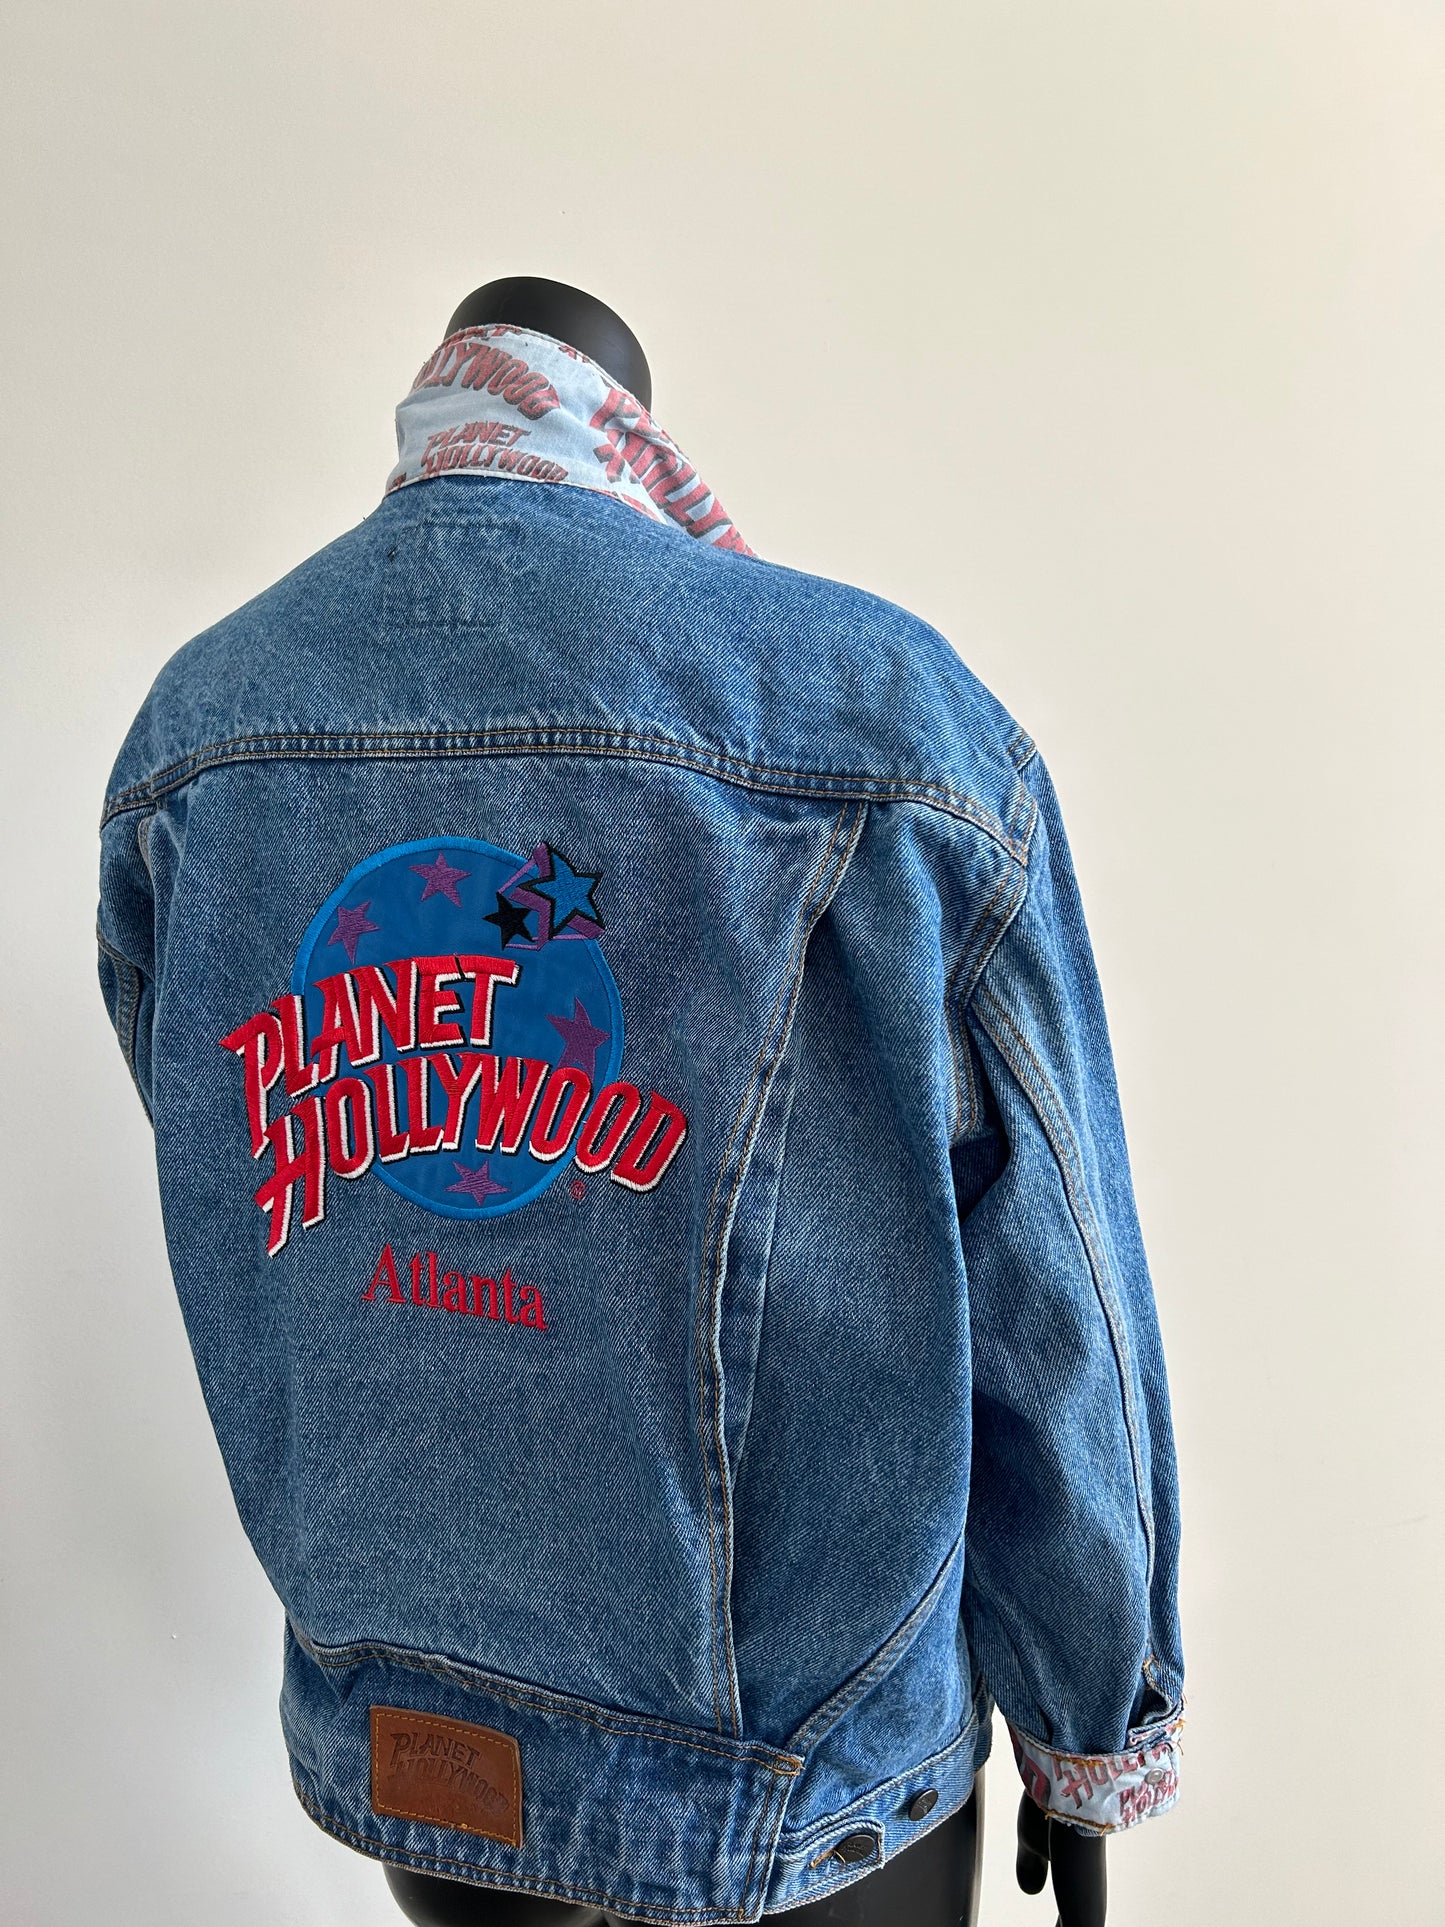 Vintage Planet Hollywood Jacket